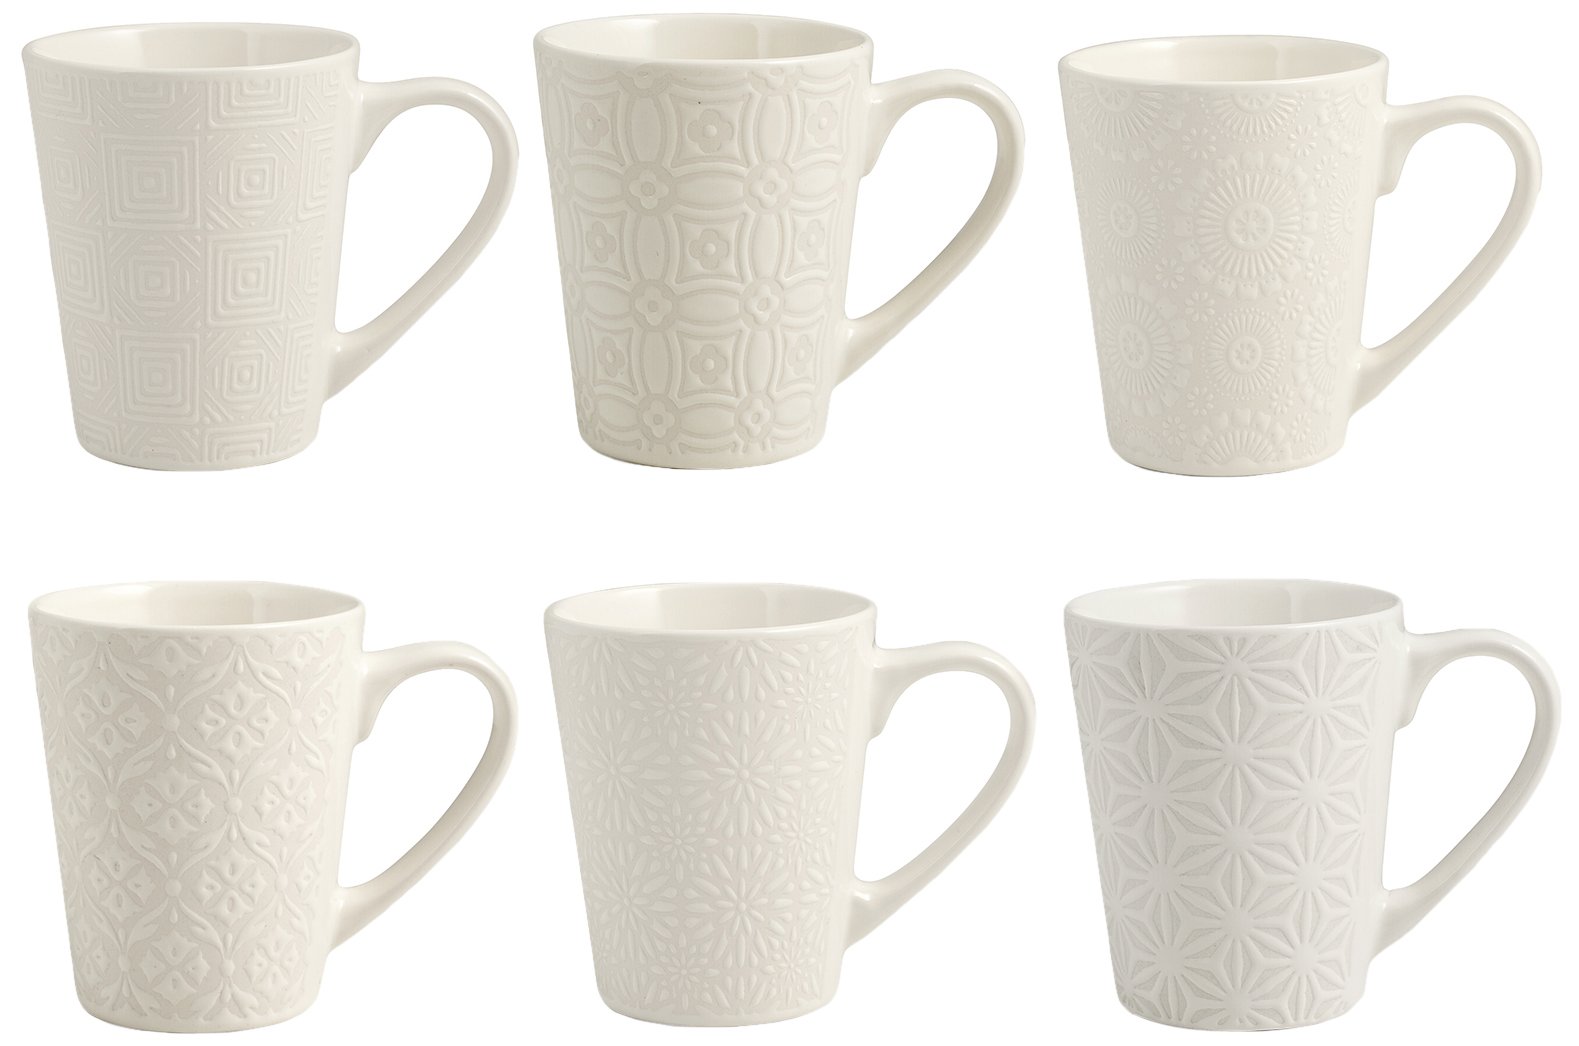 boutique en ligne H&h set 6 mug silhuette in stoneware cc 300 RUG4wQIu6 Outlet Shop 